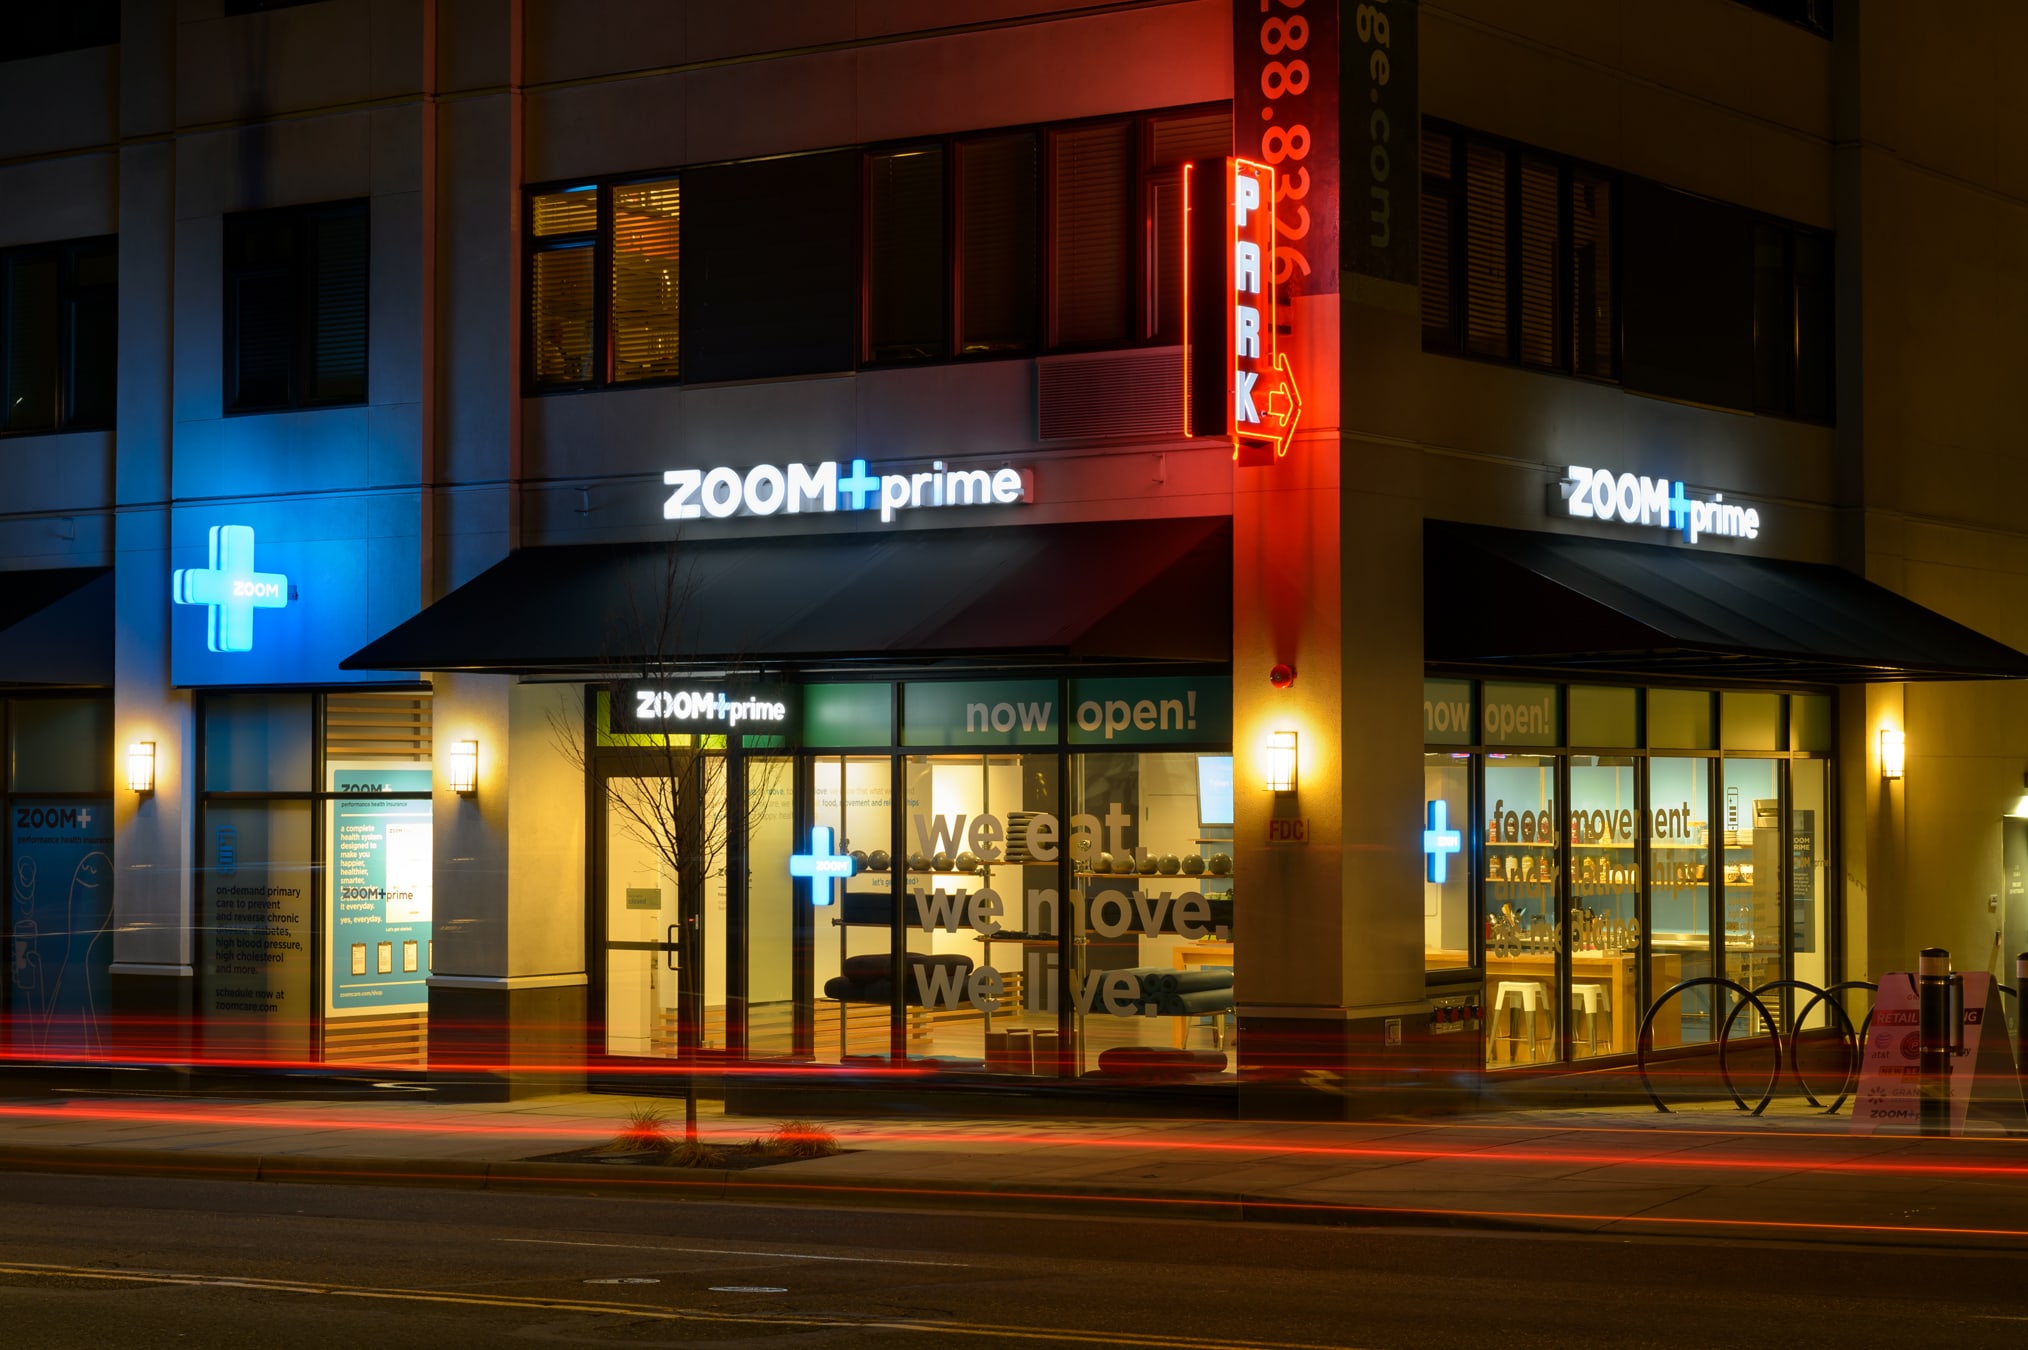 Zoom+ Prime health retail identity design